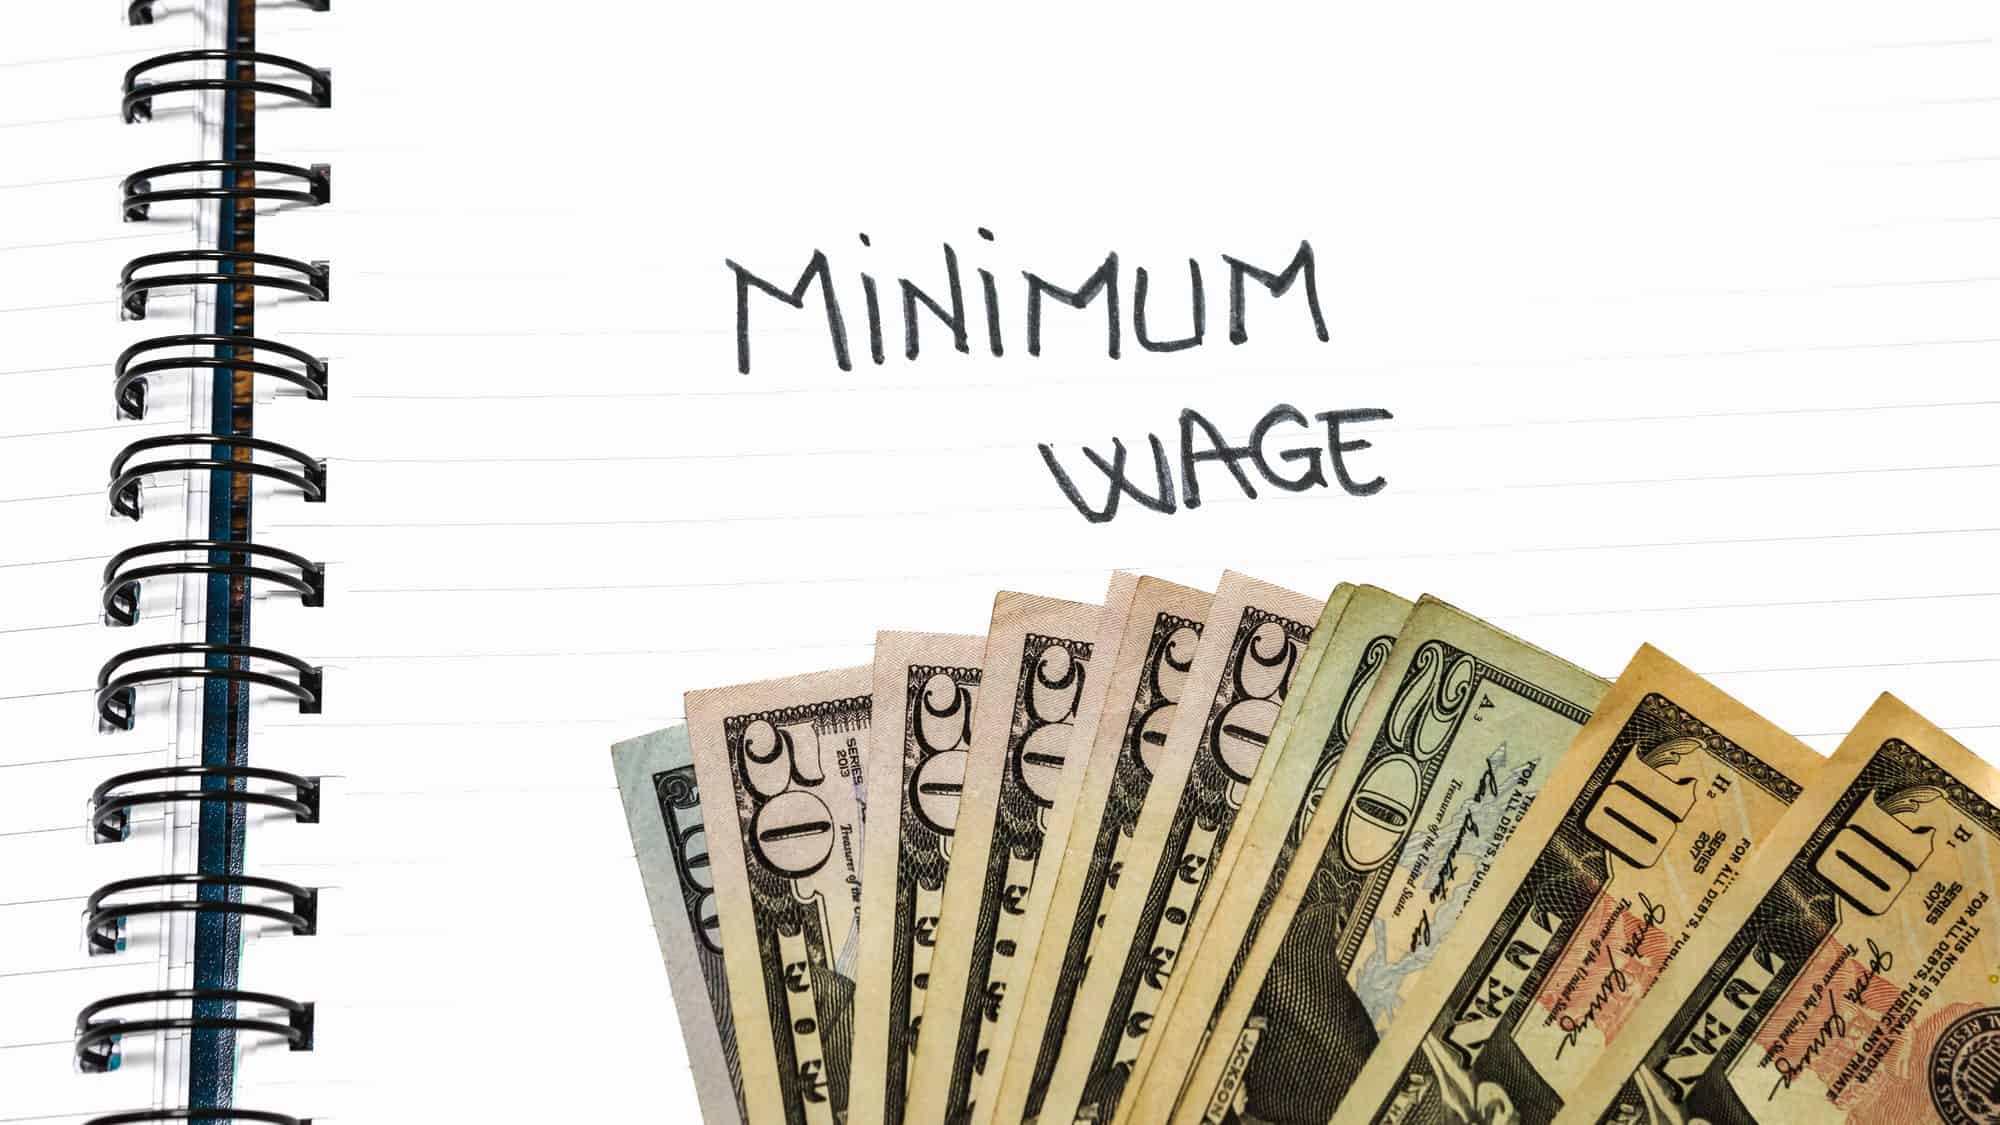 Minimum wage handwriting text on paper